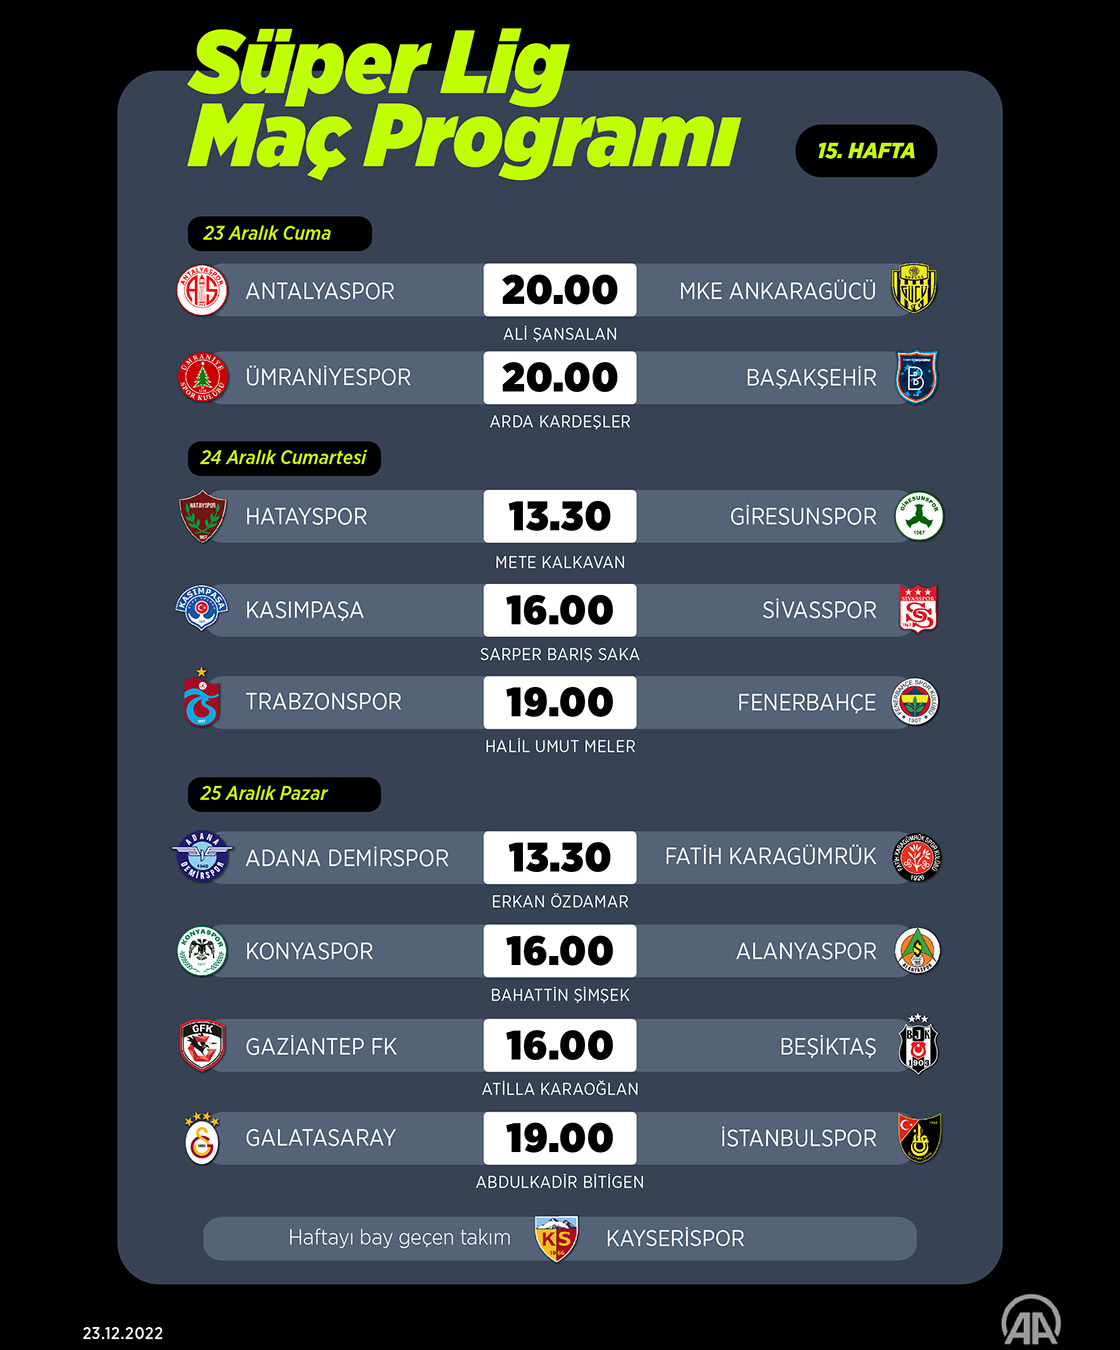 Süper Lig 15. Hafta Programı